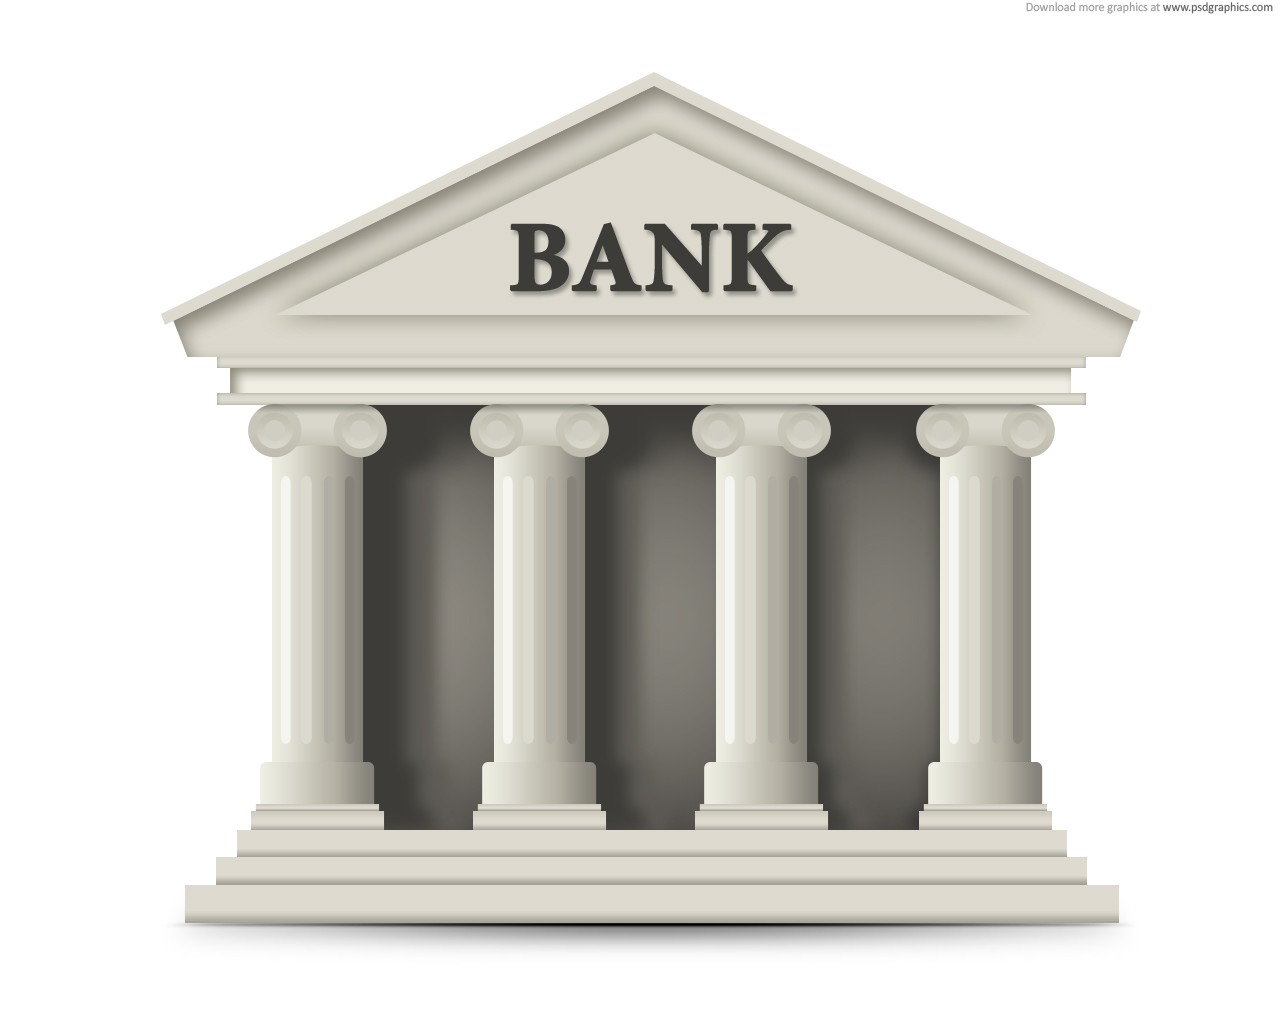 Bank pp. Банк. Здание банка. Банк рисунок. Здание банка на белом фоне.